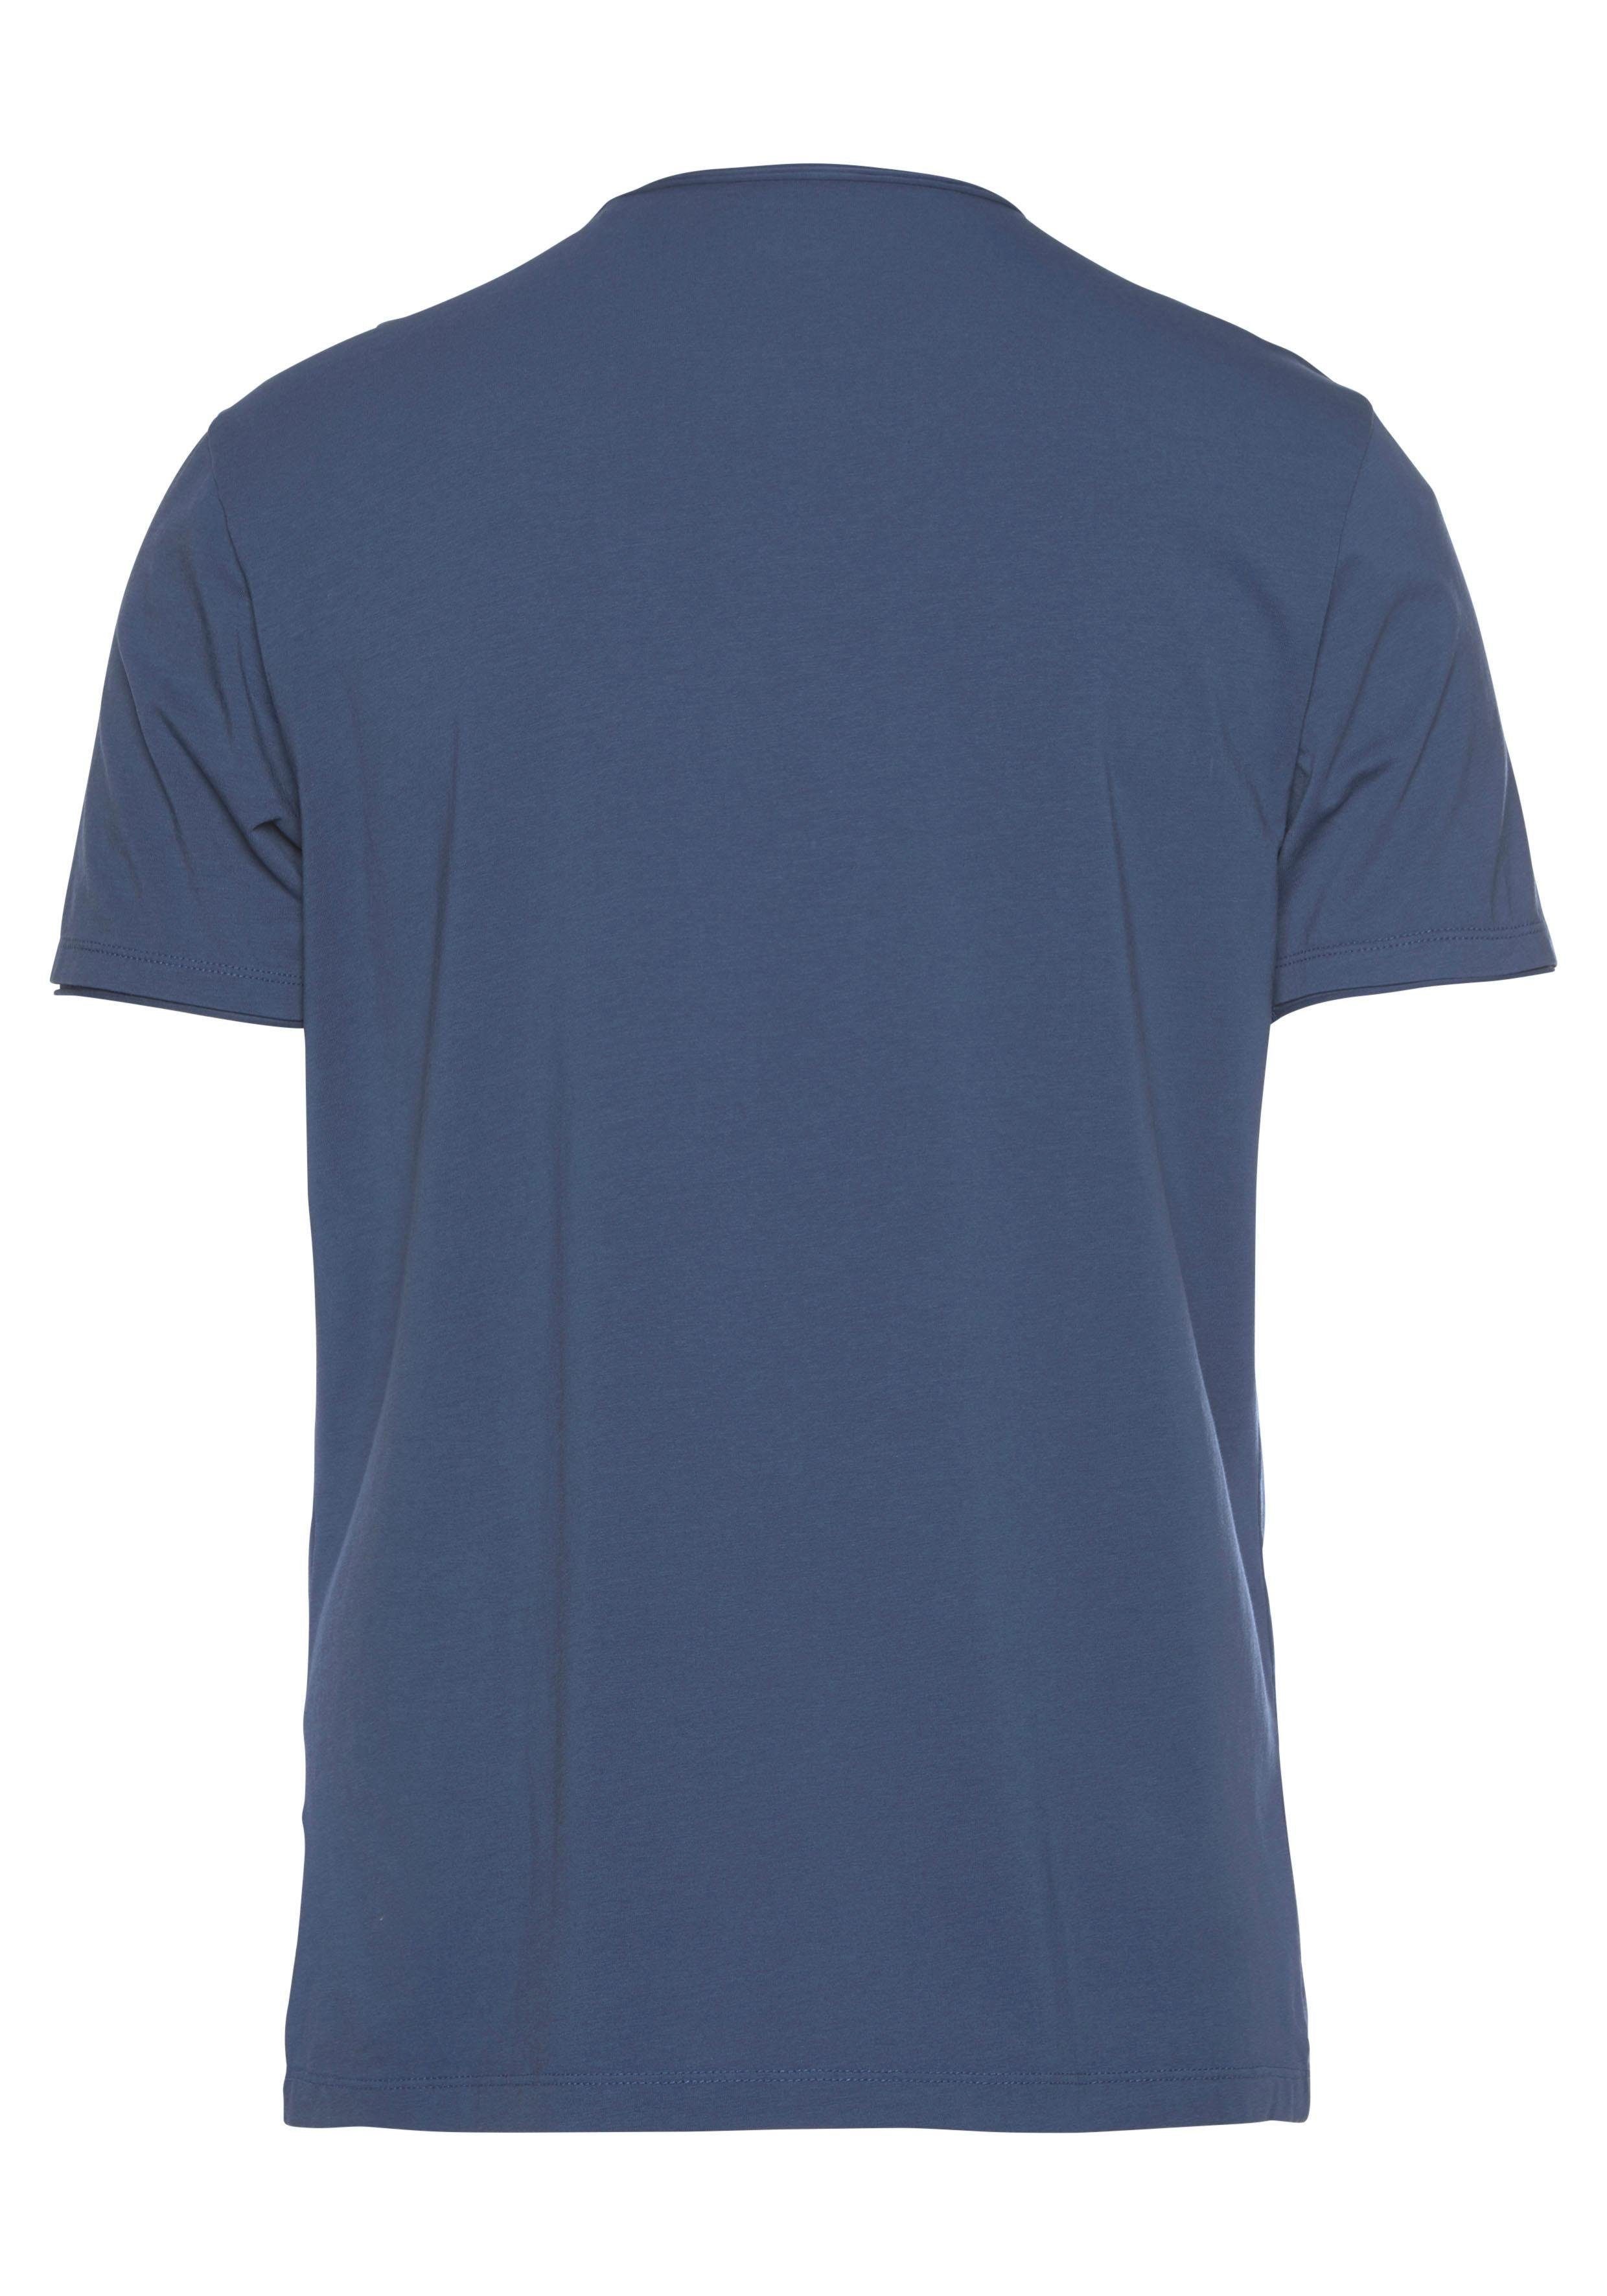 OLYMP T-Shirt Level fit indigo Five feinem Jersey aus body